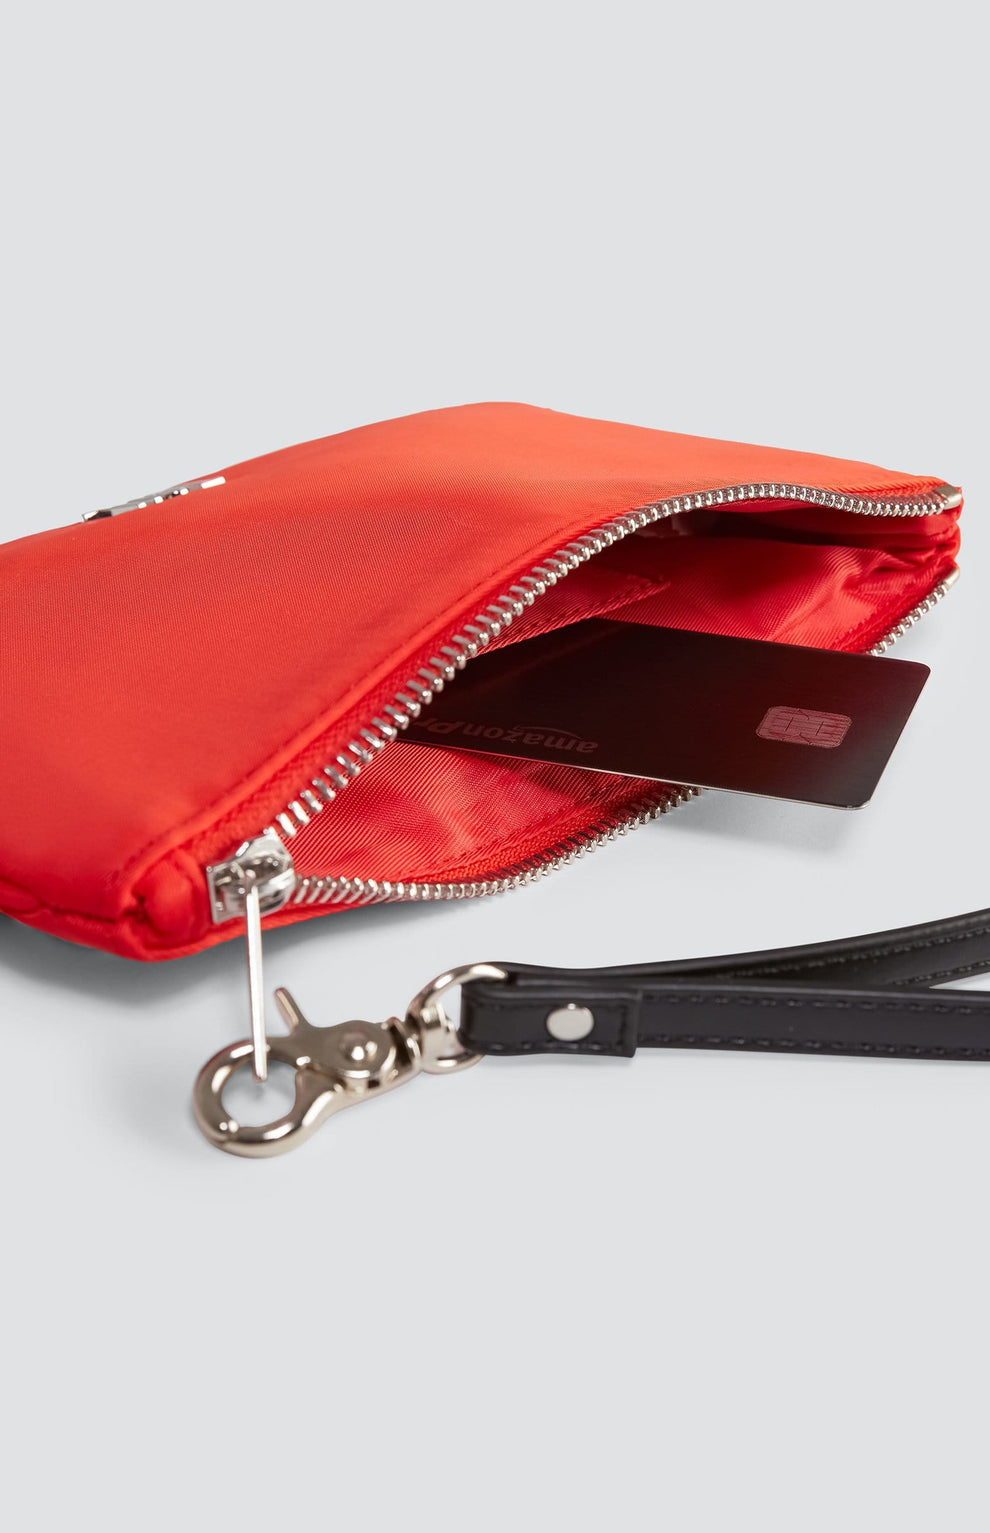 Tommy Hilfiger Red White & Blue Patriotic Wristlet Purse Clutch Handbag NWT  | eBay